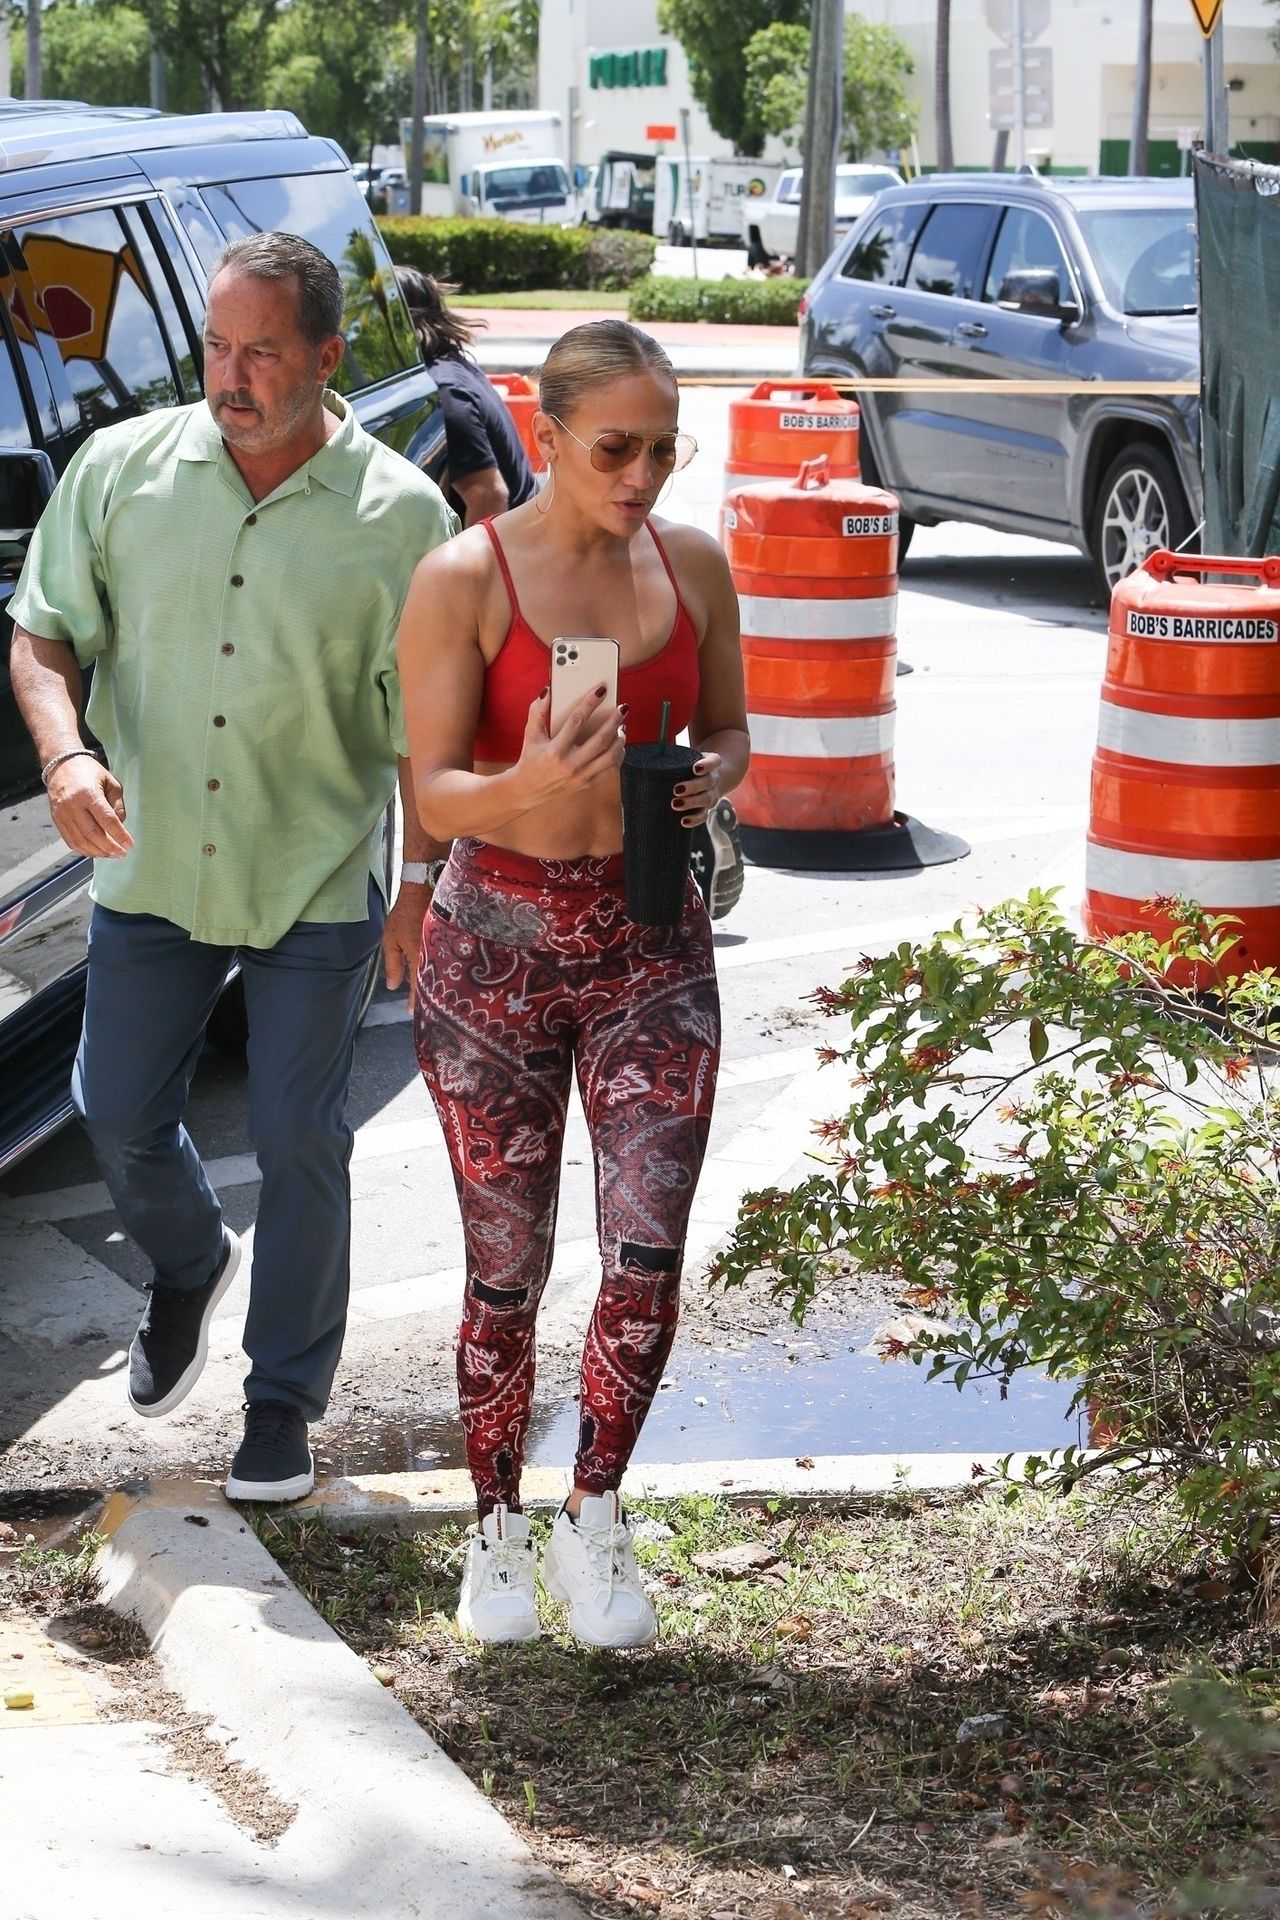 Jennifer-Lopez-Sexy-The-Fappening-Blog-3.jpg